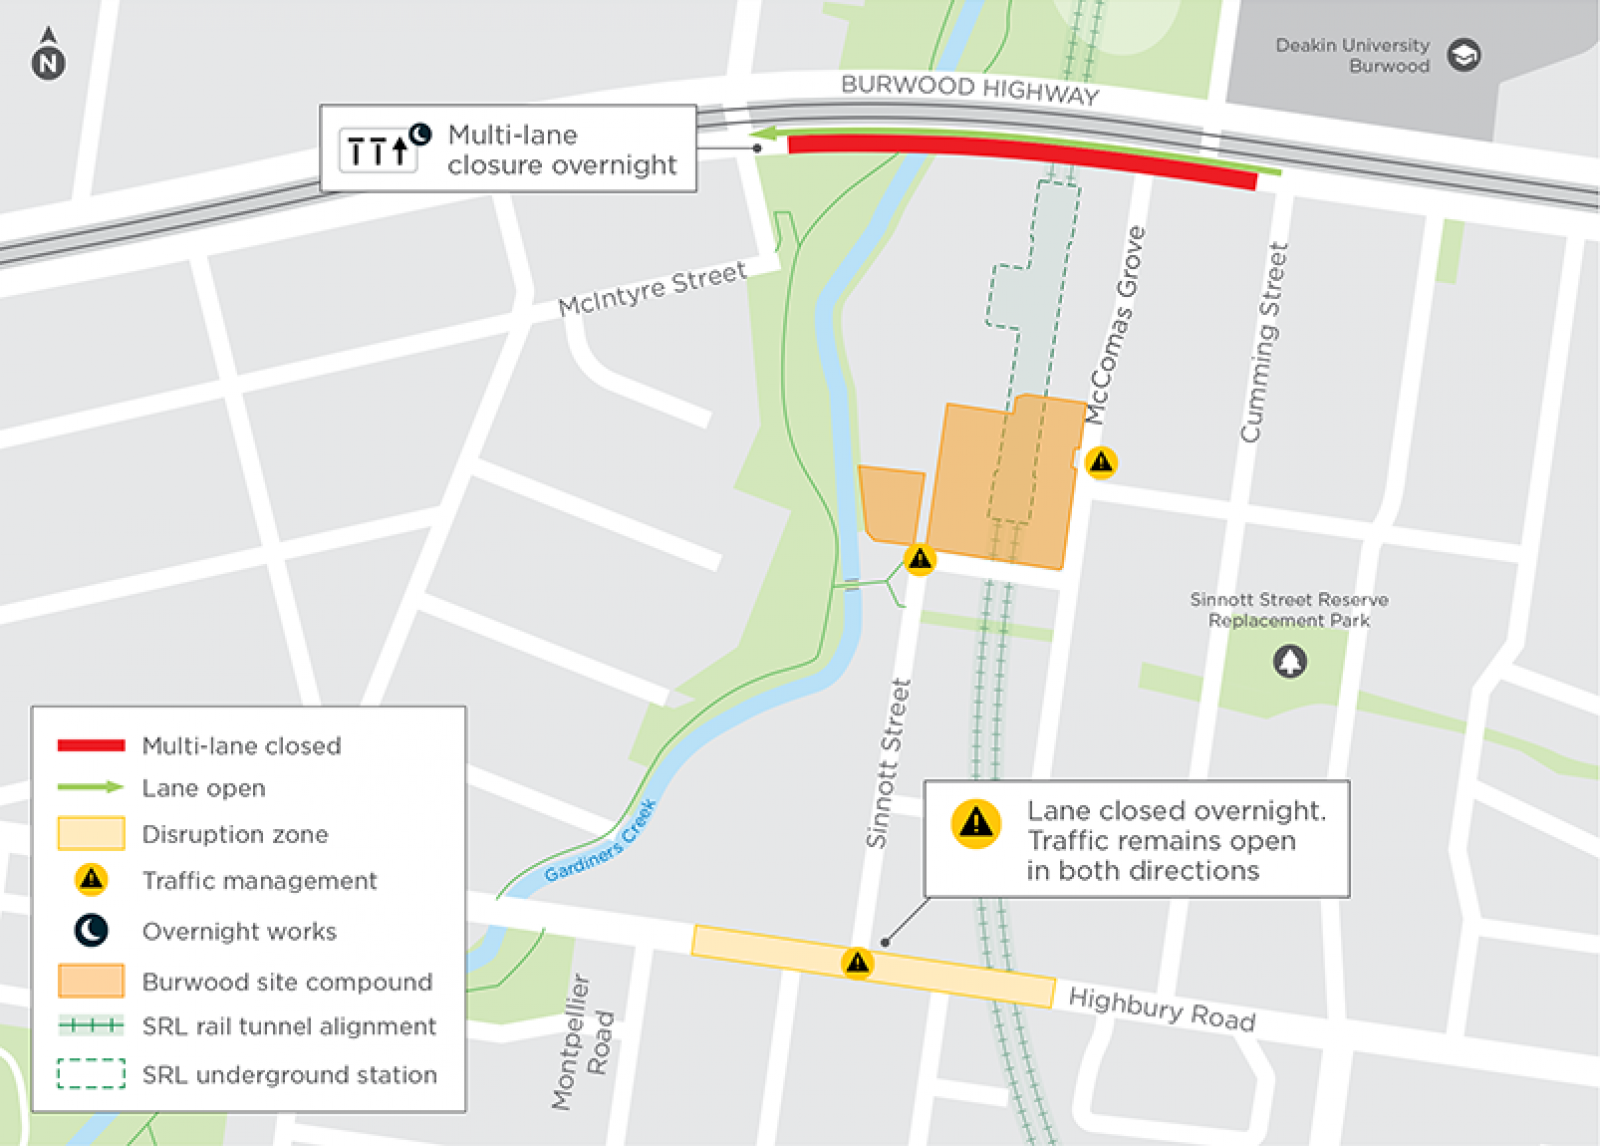 Map: Burwood Highway multi-lane closure. Full details captioned below.